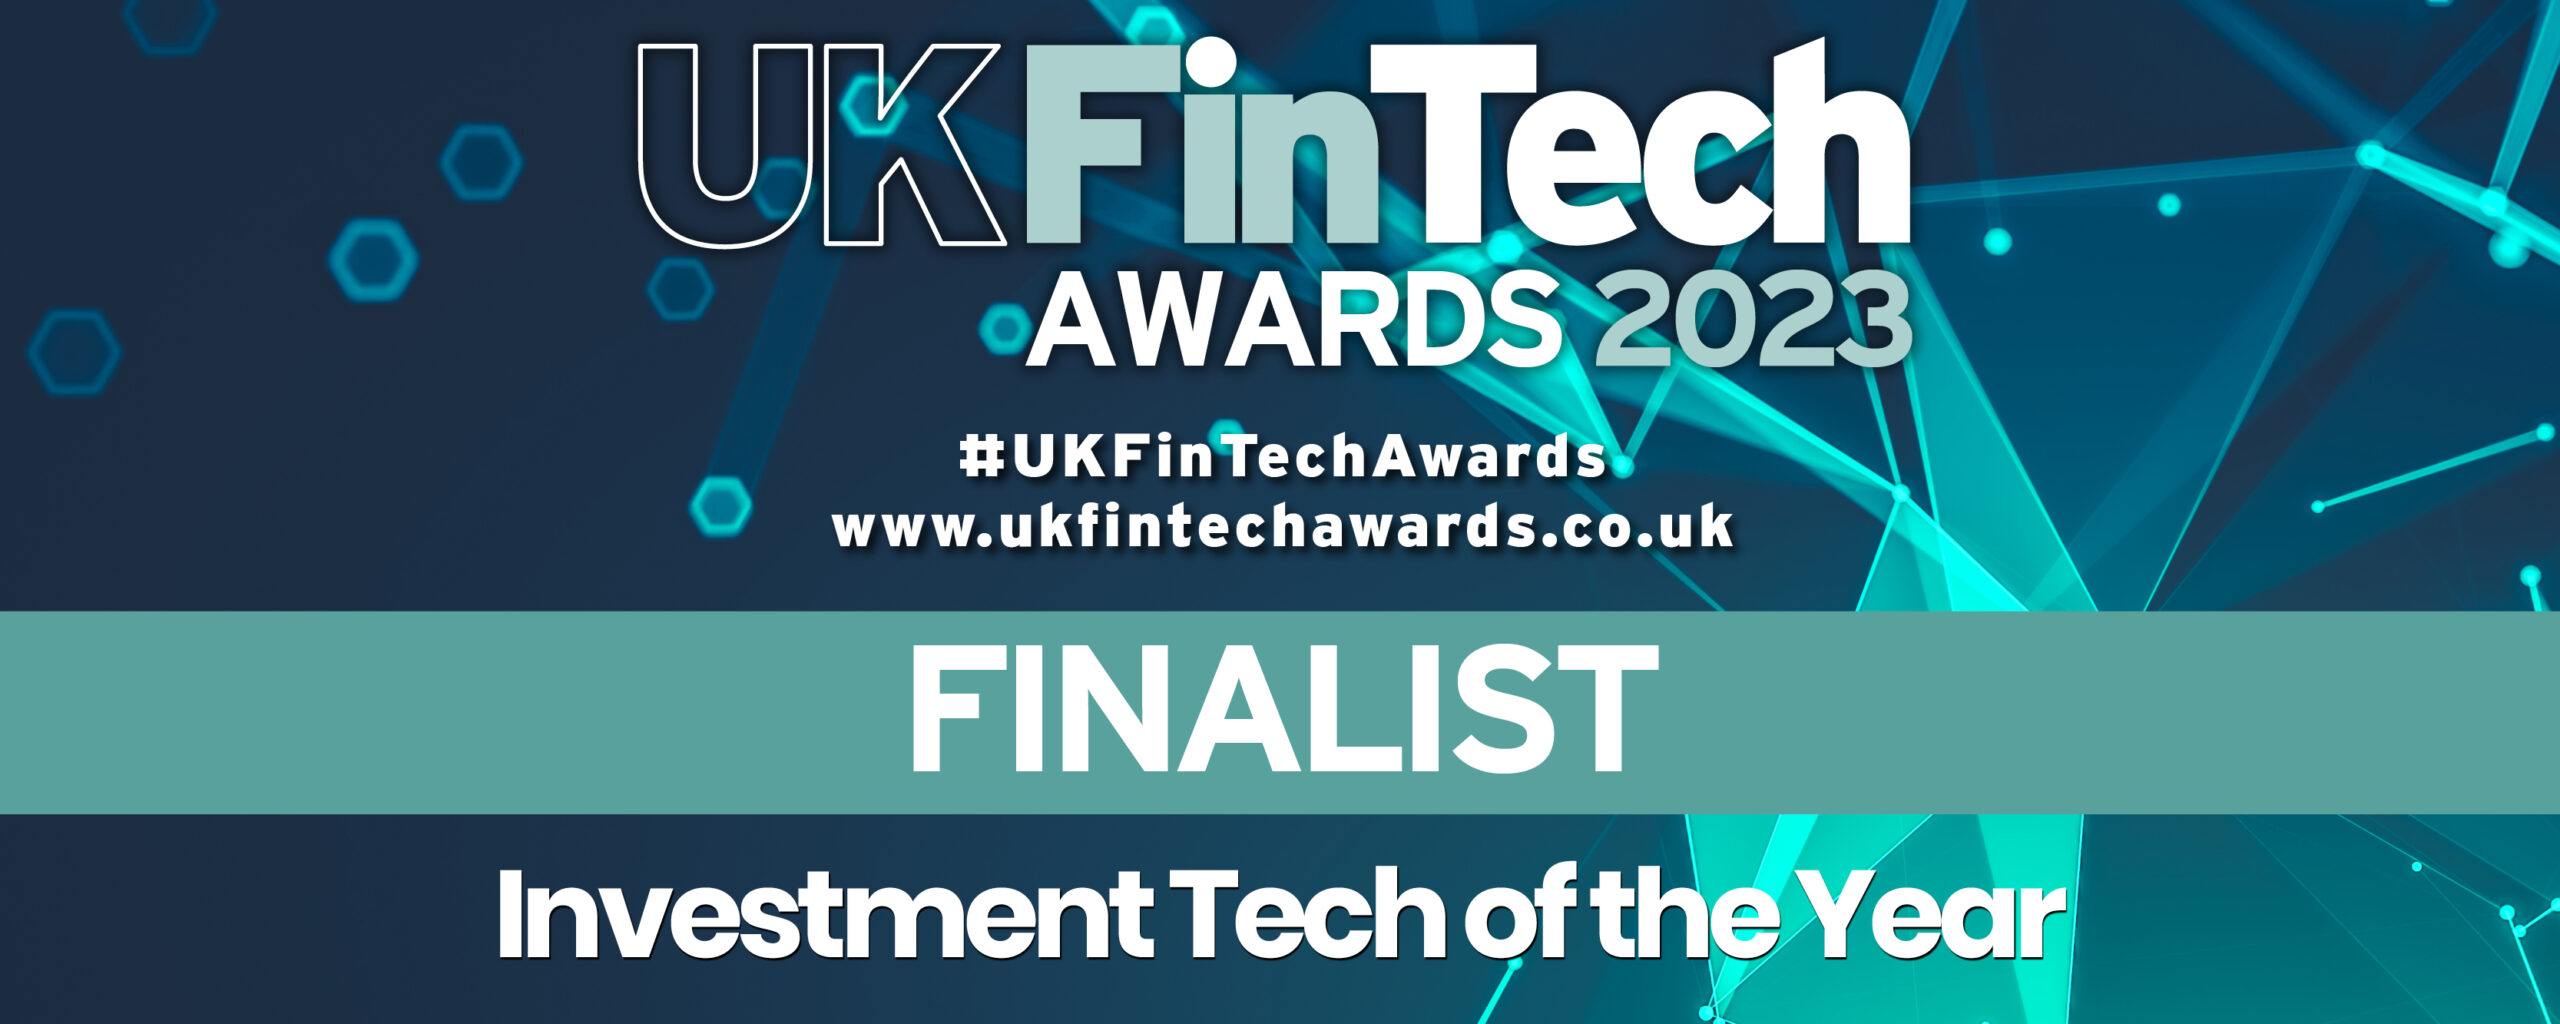 UKFINTECH 2023 finalist graphics - footer_Investment (1)